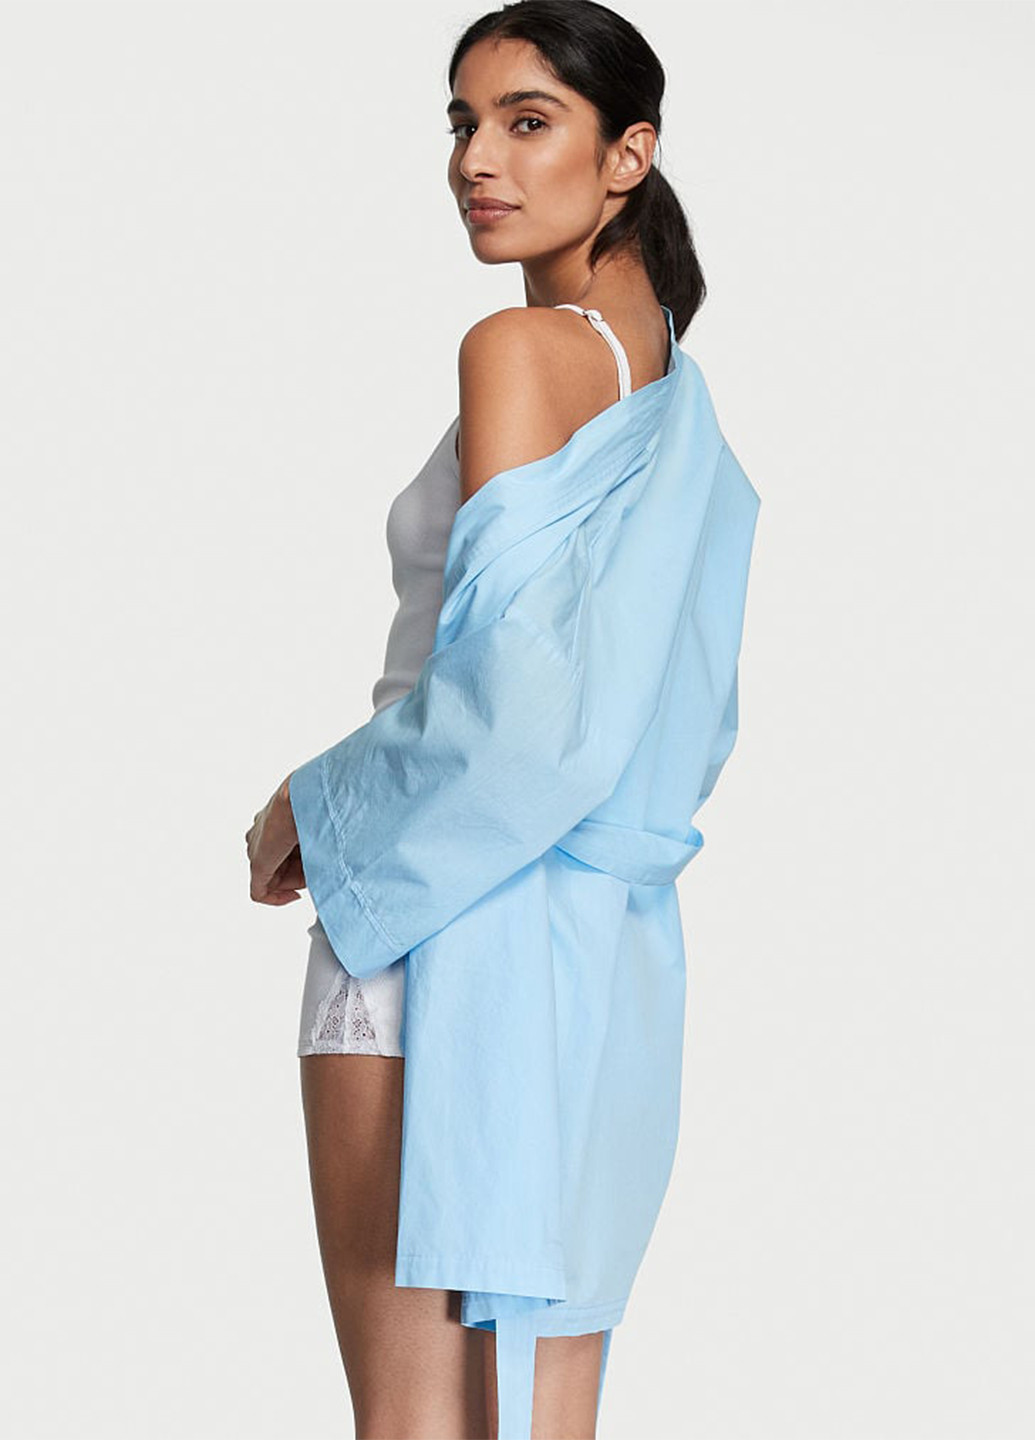 Голубой демисезонный комплект (халат, майка, шорты) Victoria's Secret